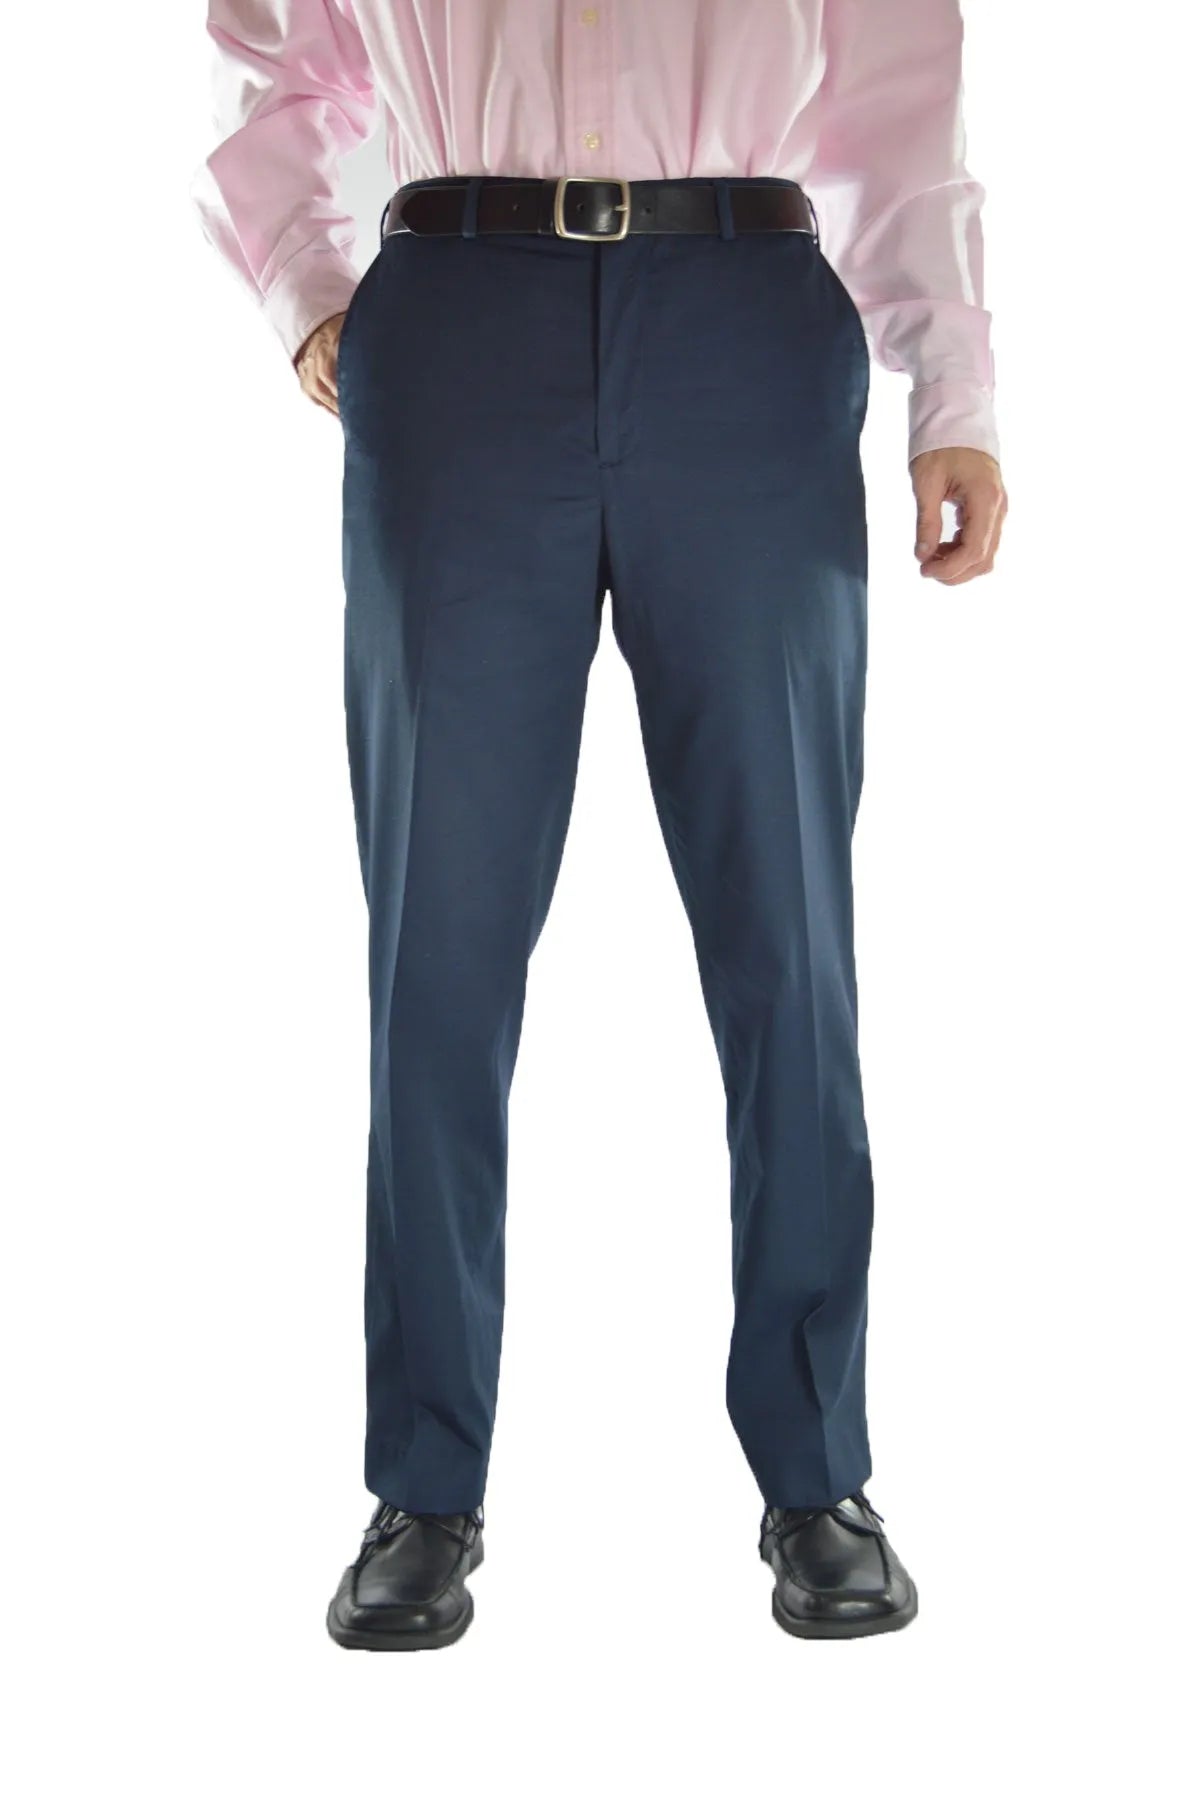 TopLLC Mens Casual Solid Dress Pants Fashion Cutton Zipper Pants